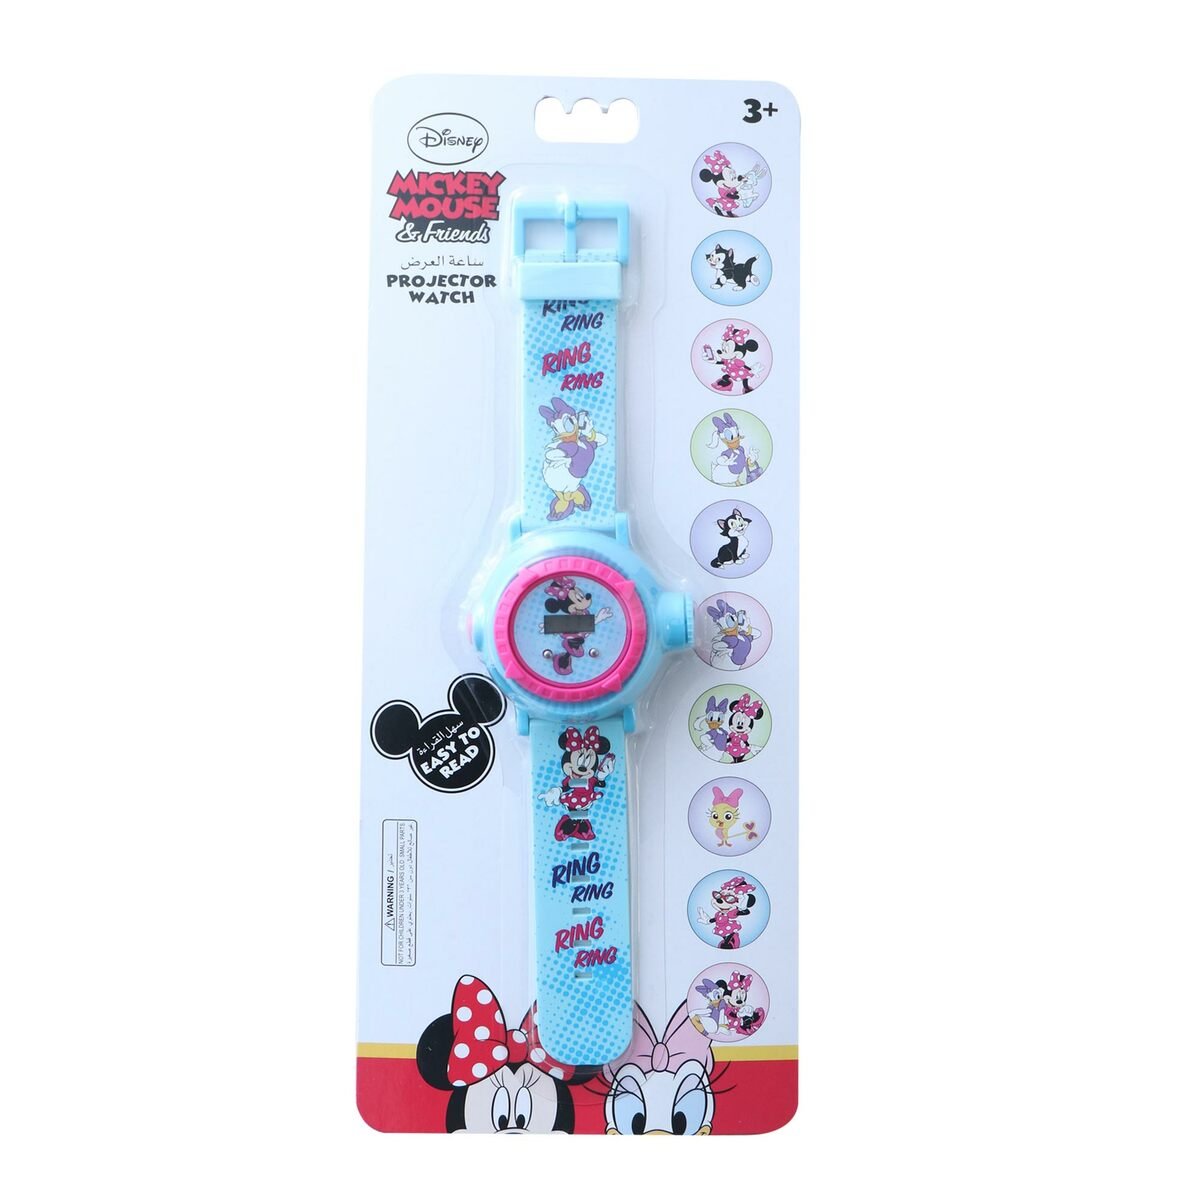 Disney Minnie & Daisy Projector Watch SA8045-K